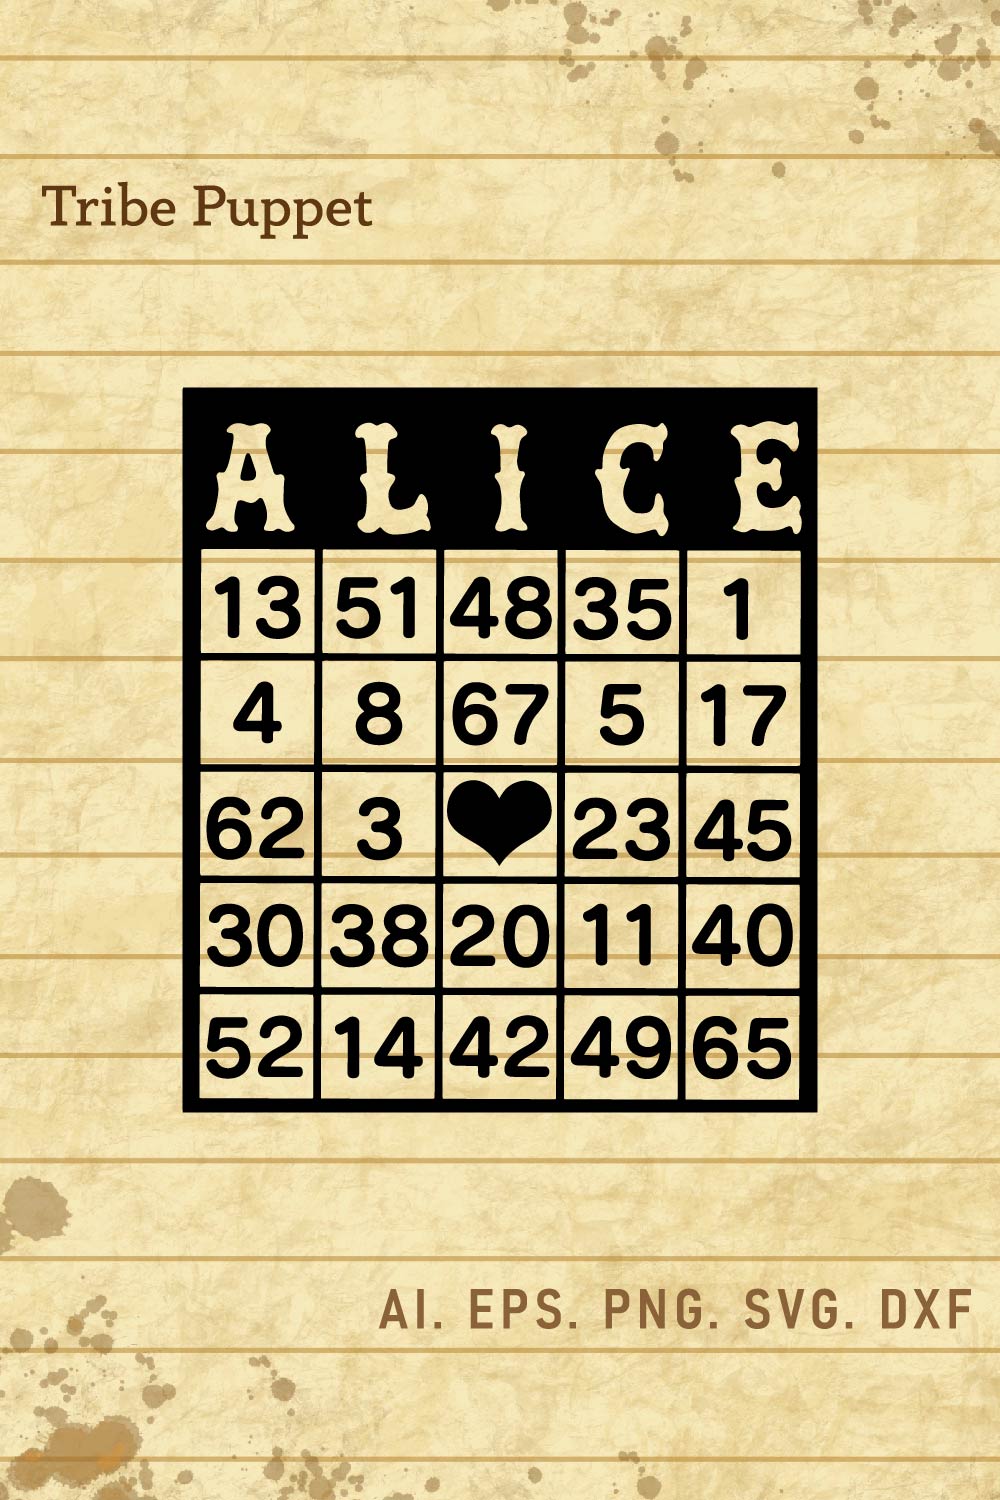 Alice's Tea Party pinterest preview image.